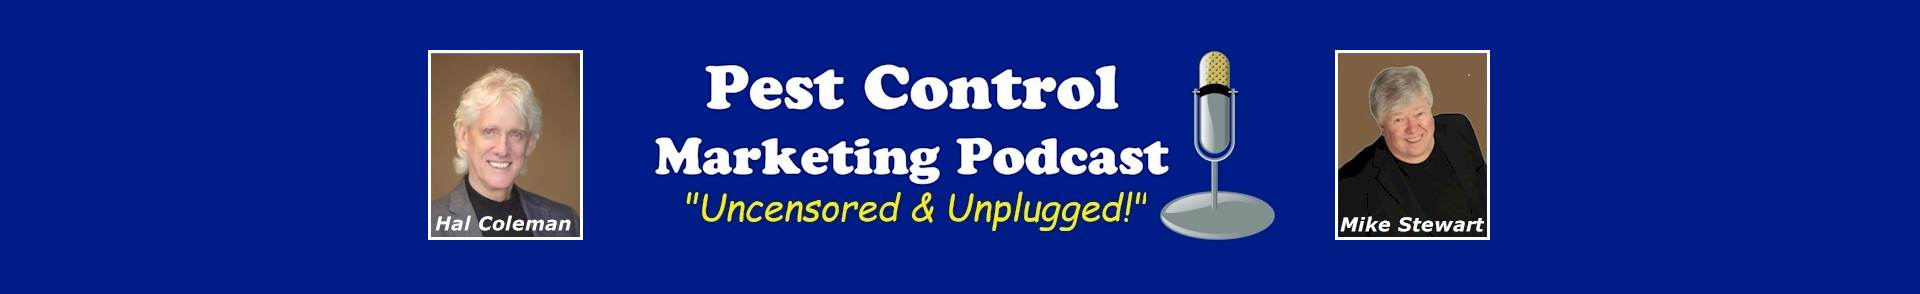 Pest Control Marketing Podcast